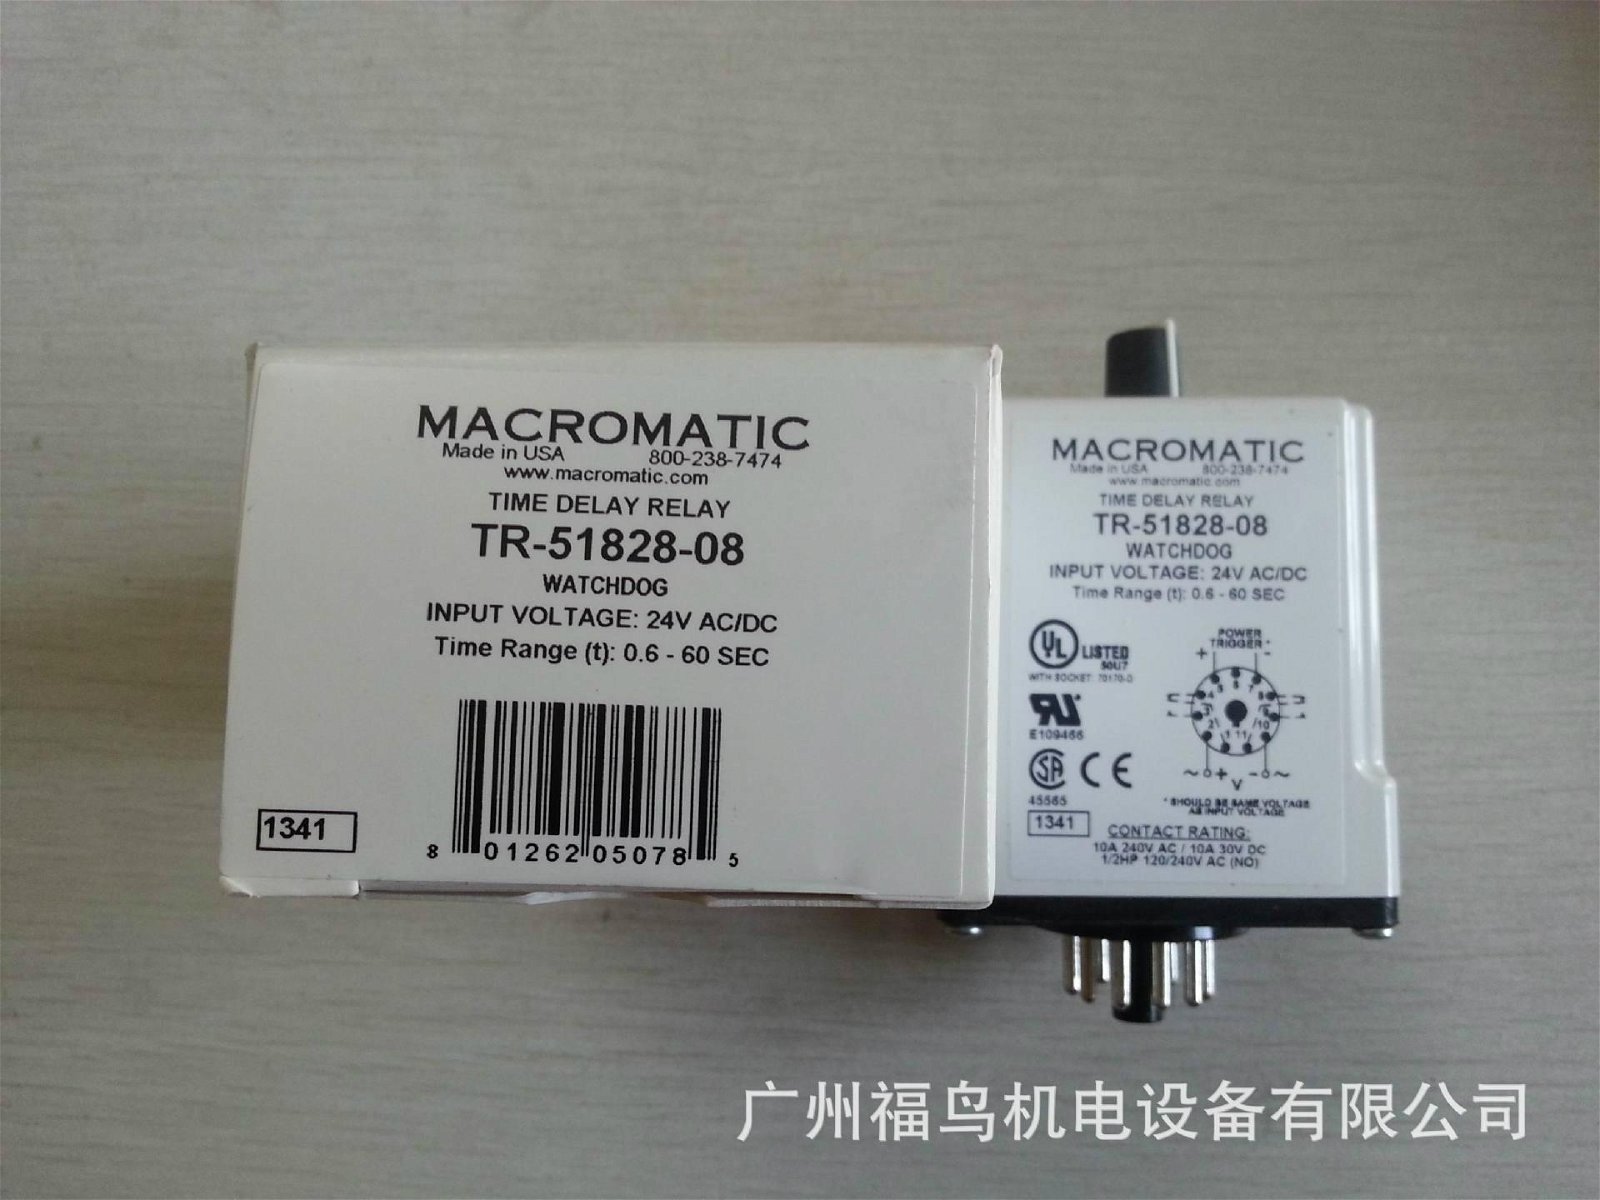 MACROMATIC時間繼電器, 型號: TR-51828-08